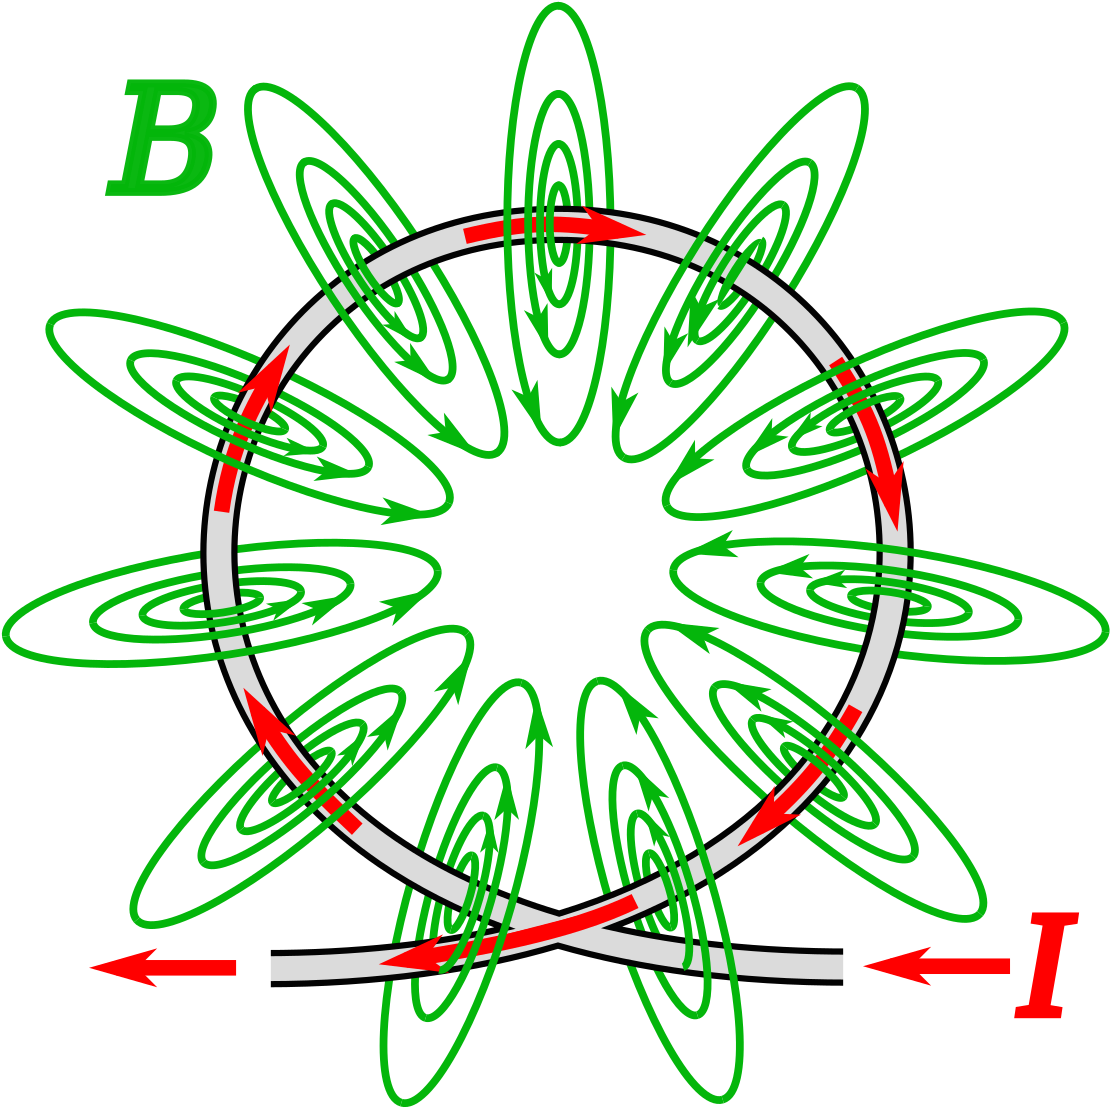 A Circular Design With Arrows And Circles